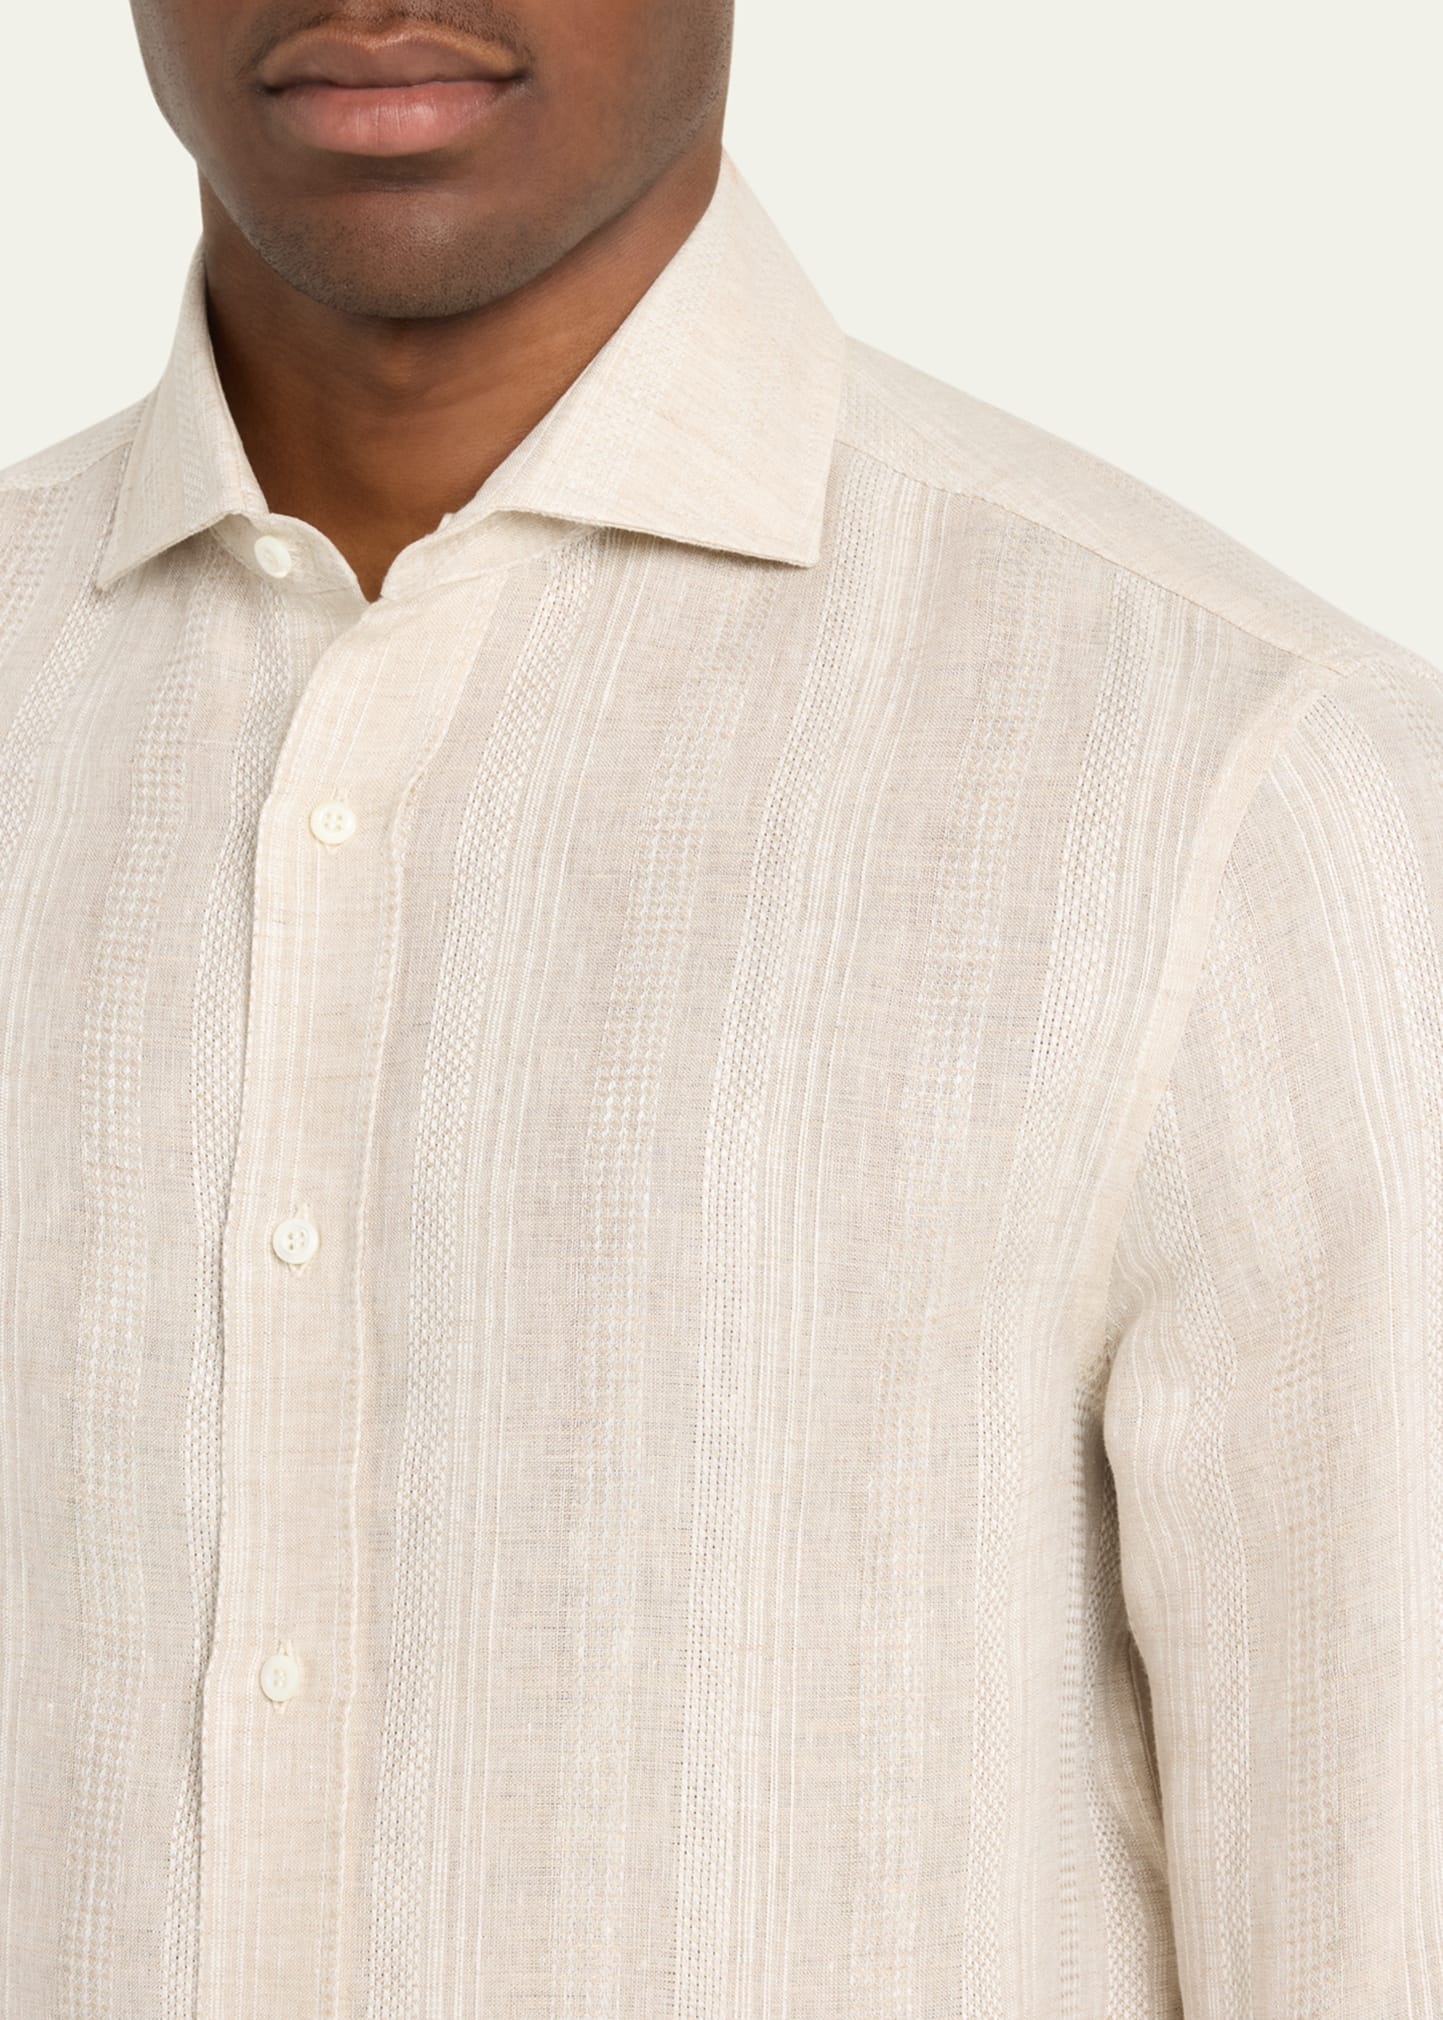 Men's Linen Stripe Casual Button-Down Shirt - 5